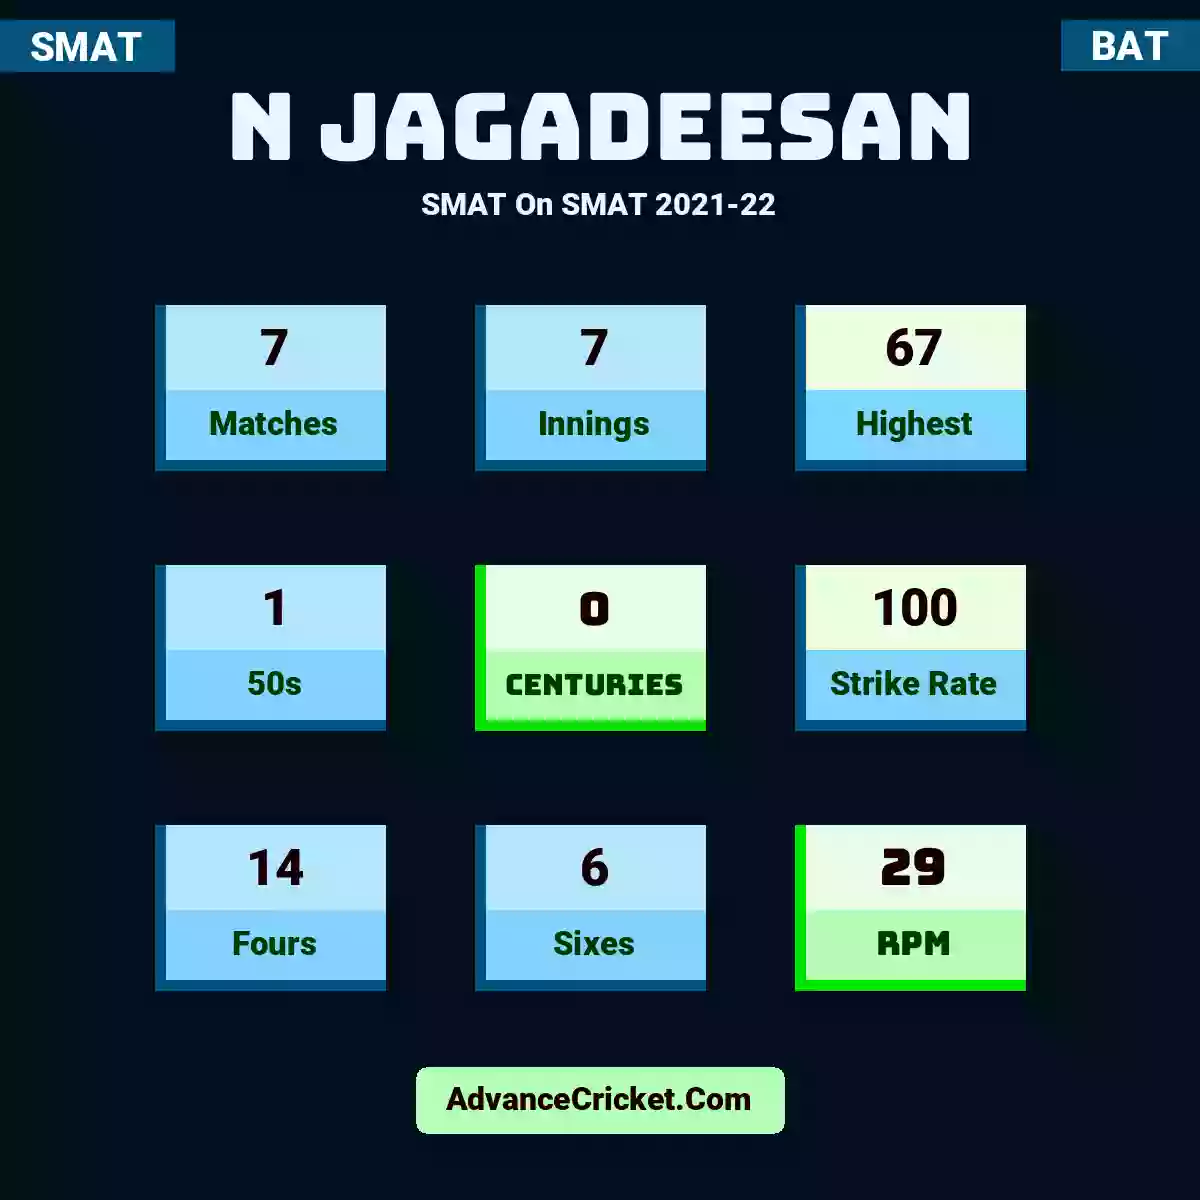 N Jagadeesan SMAT  On SMAT 2021-22, N Jagadeesan played 7 matches, scored 67 runs as highest, 1 half-centuries, and 0 centuries, with a strike rate of 100. N.Jagadeesan hit 14 fours and 6 sixes, with an RPM of 29.